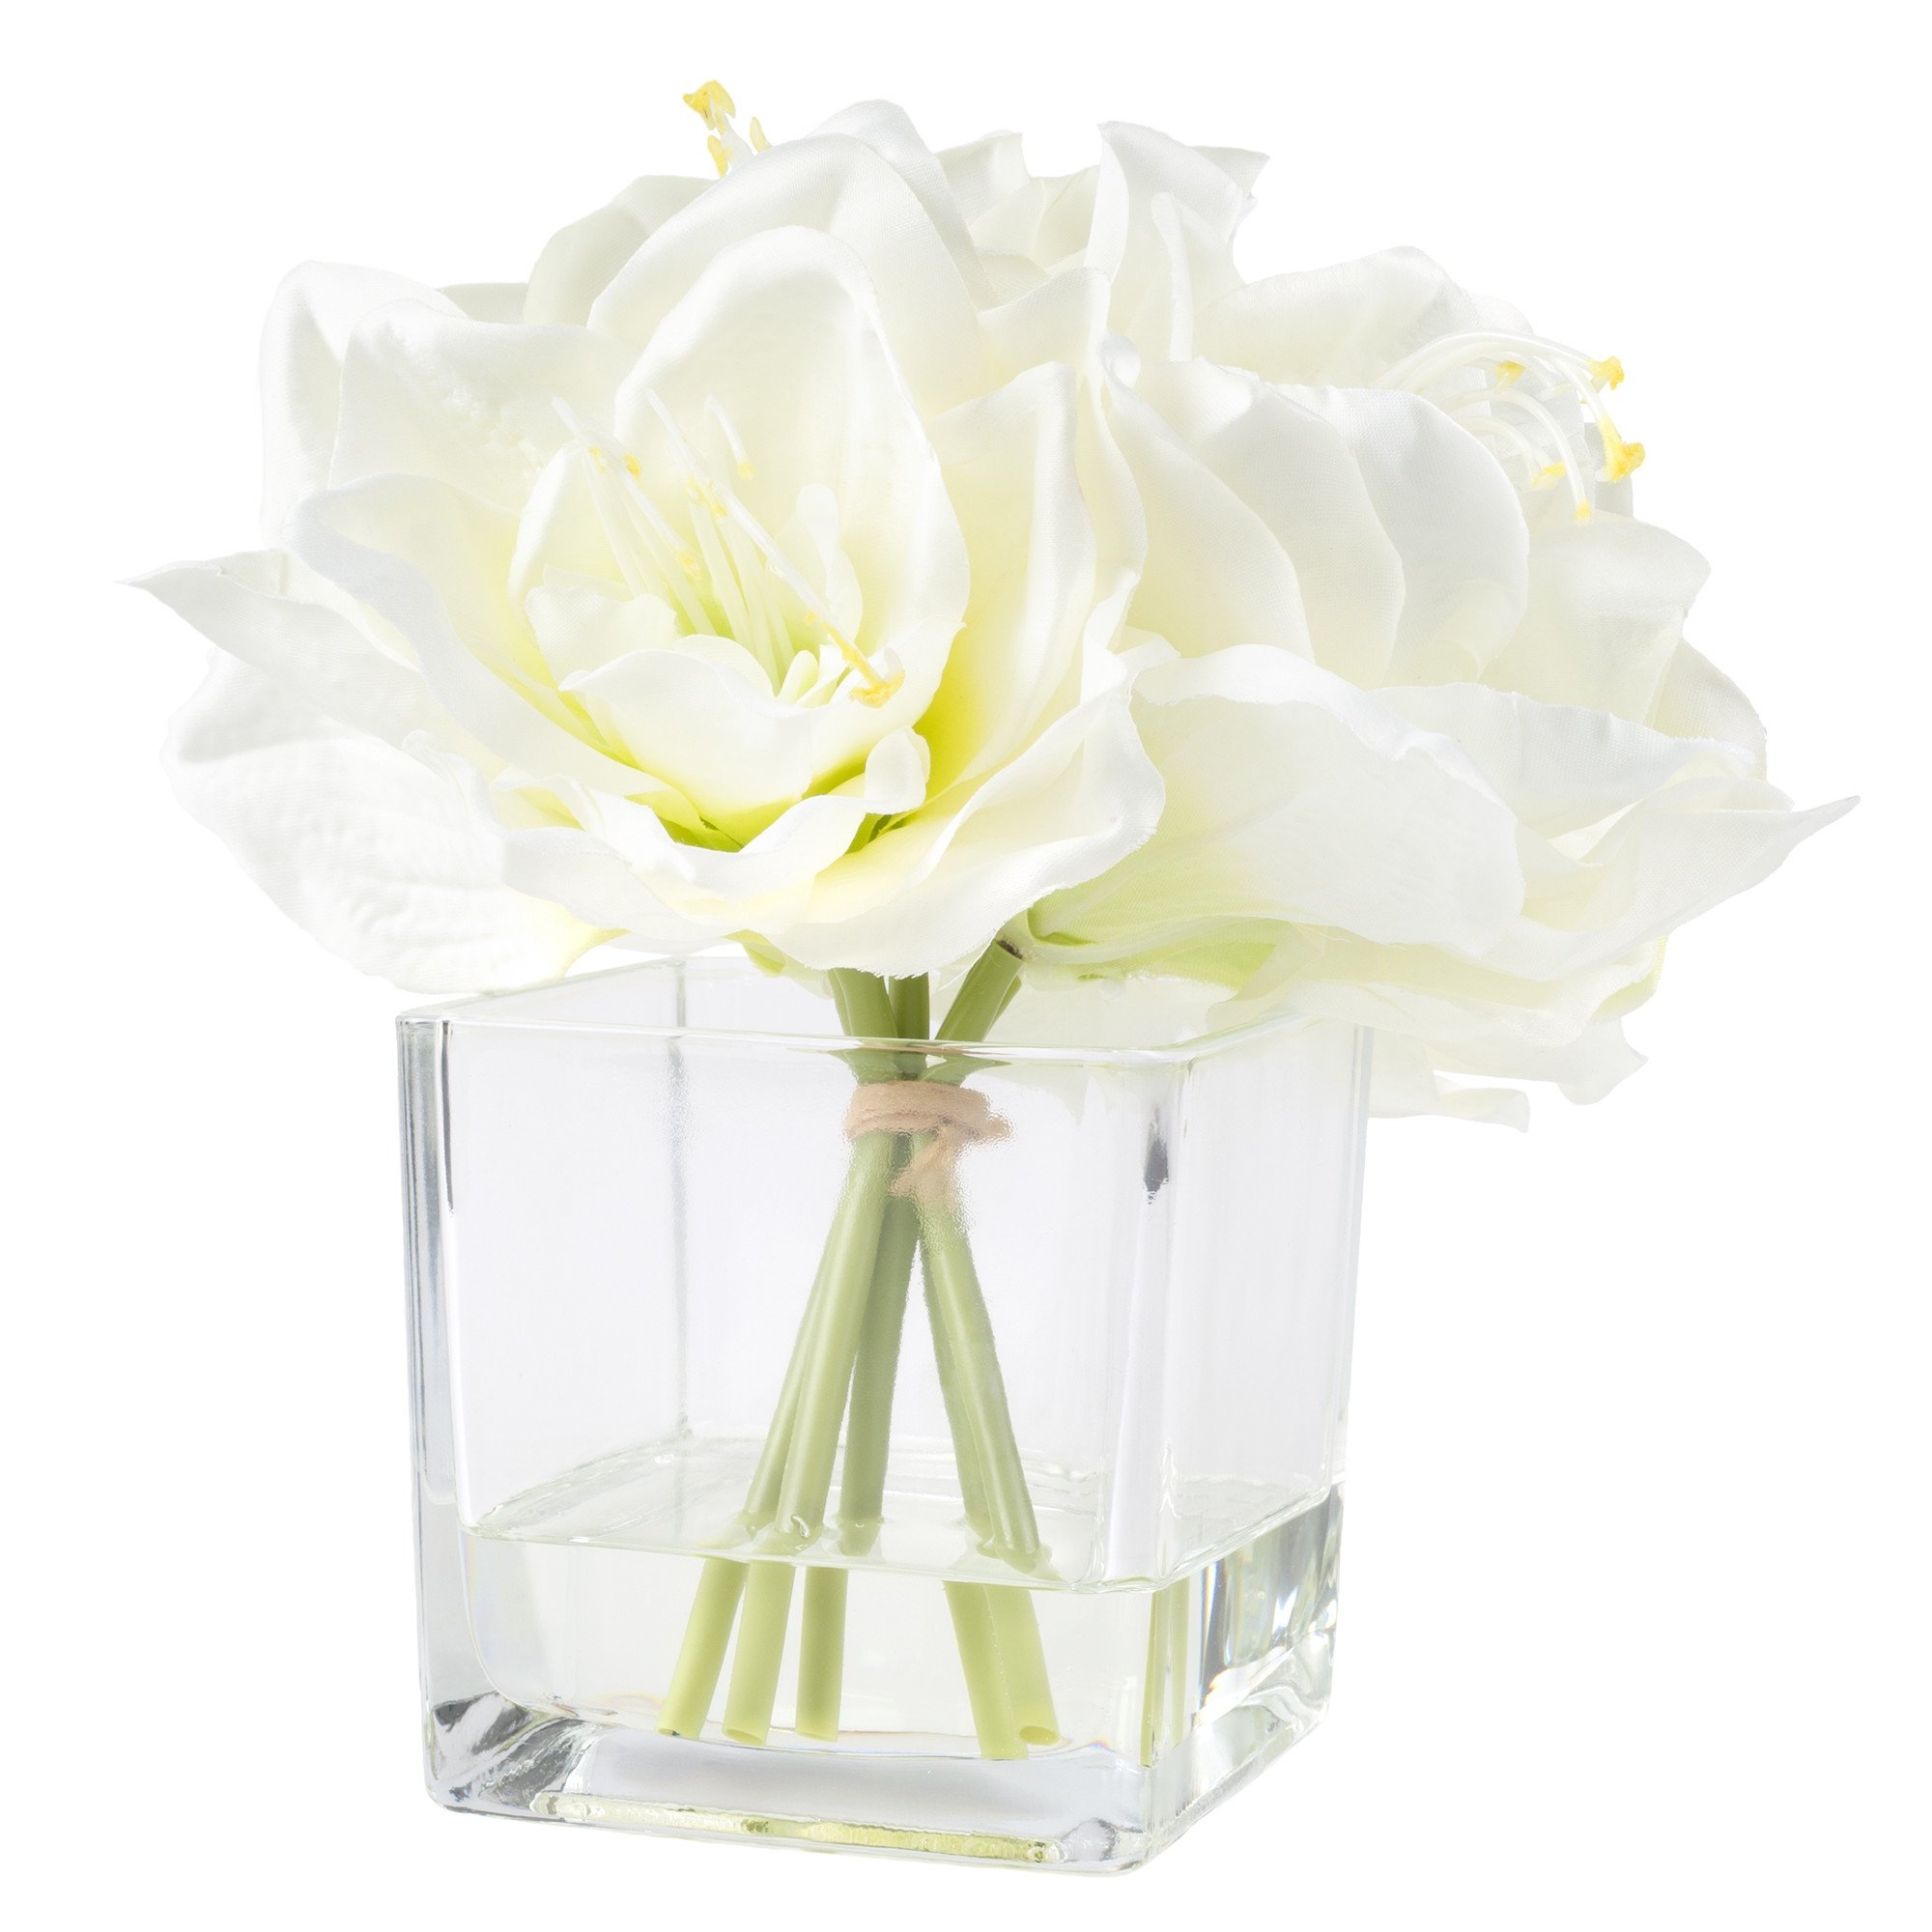 Lily Arrangement in Glass Vase - Image 0